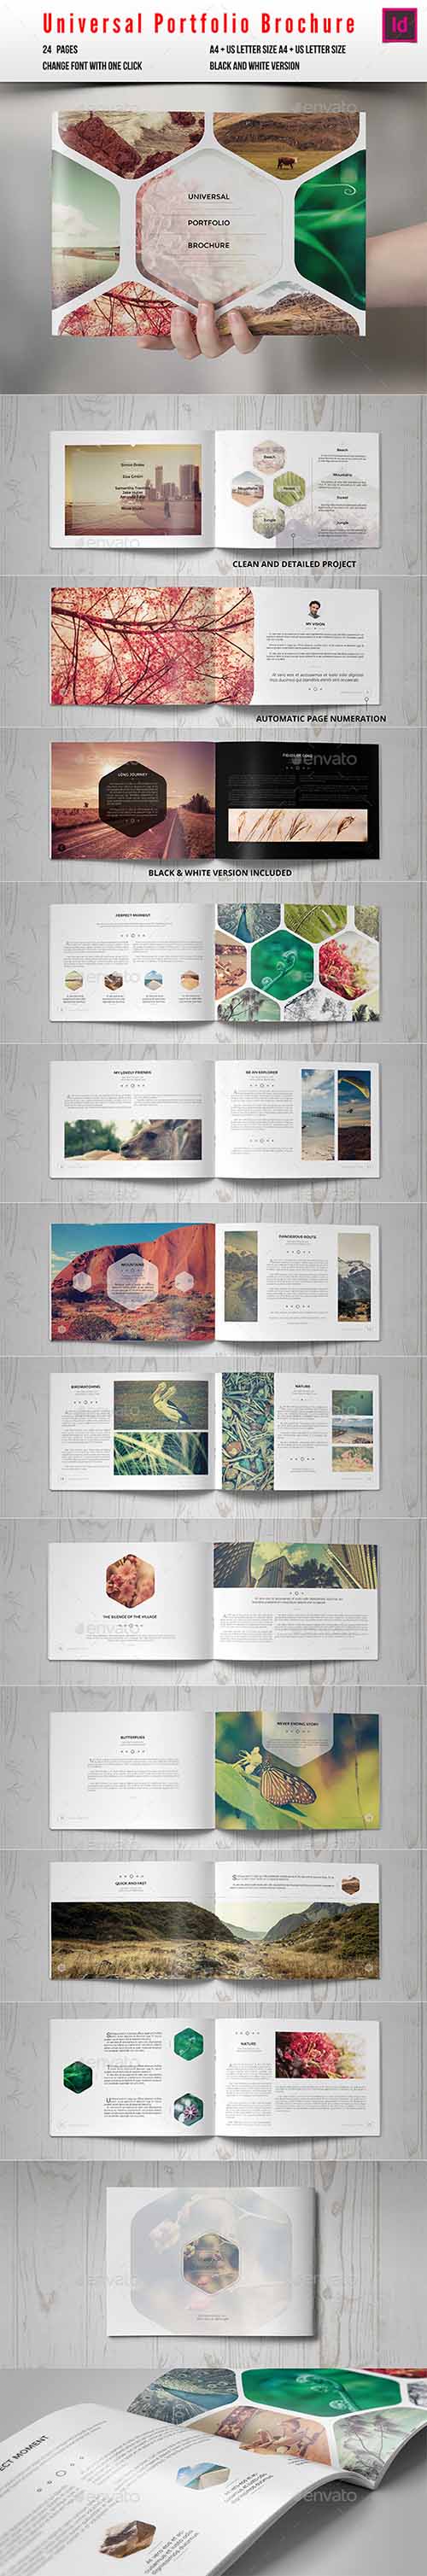 Graphicriver - Universal Portfolio Brochure / Catalog 10164031